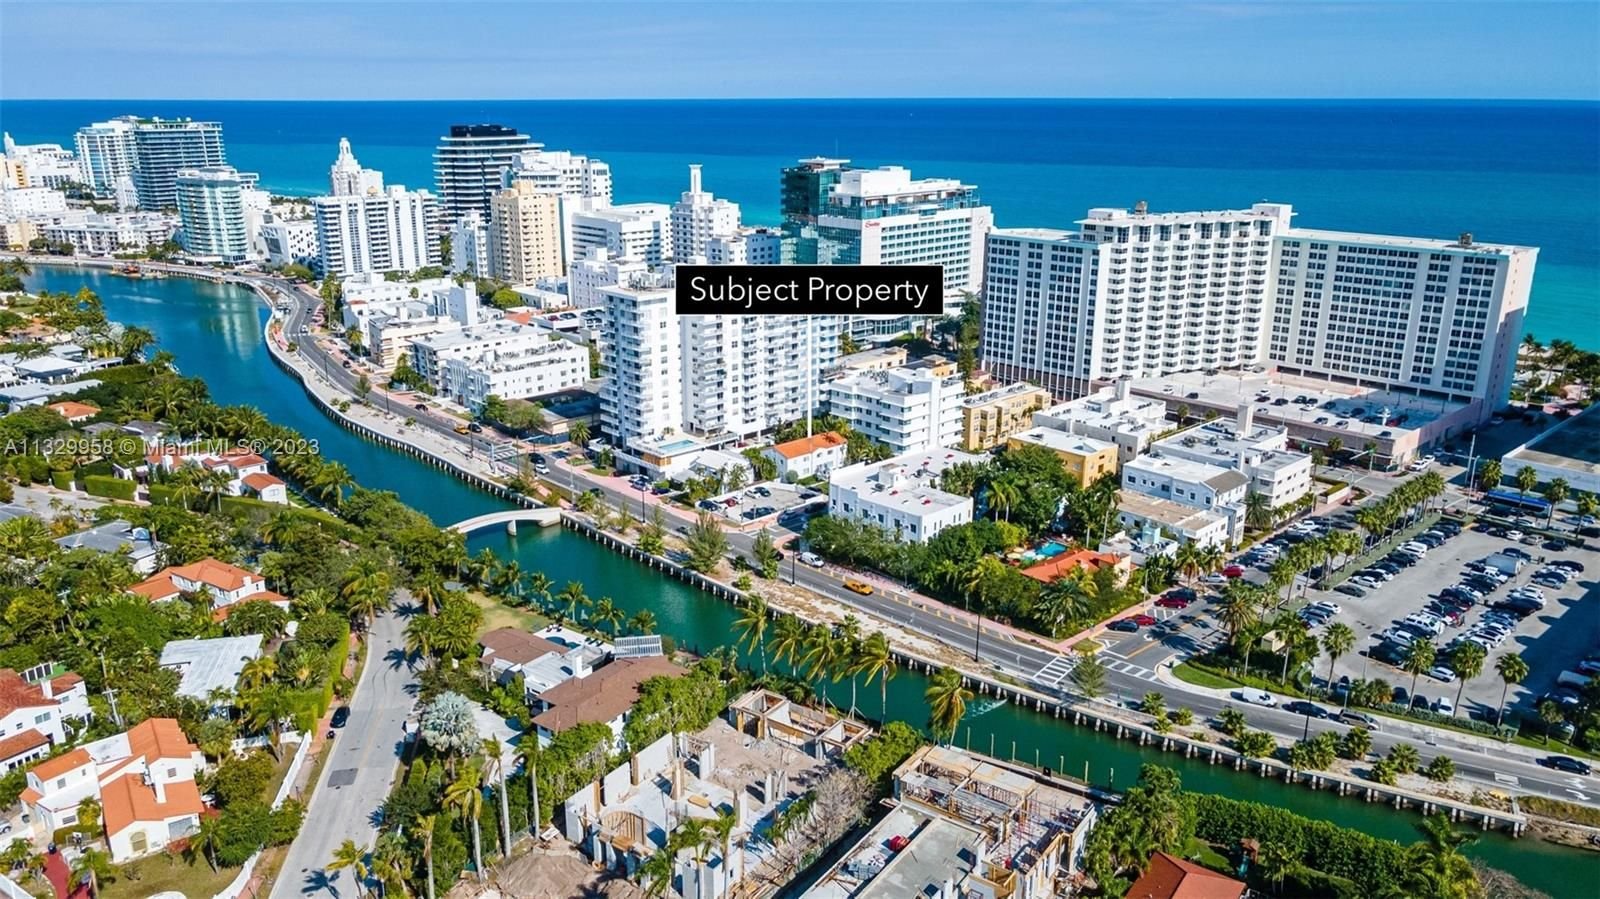 Real estate property located at 241 28th St, Miami-Dade County, Miami Beach, FL